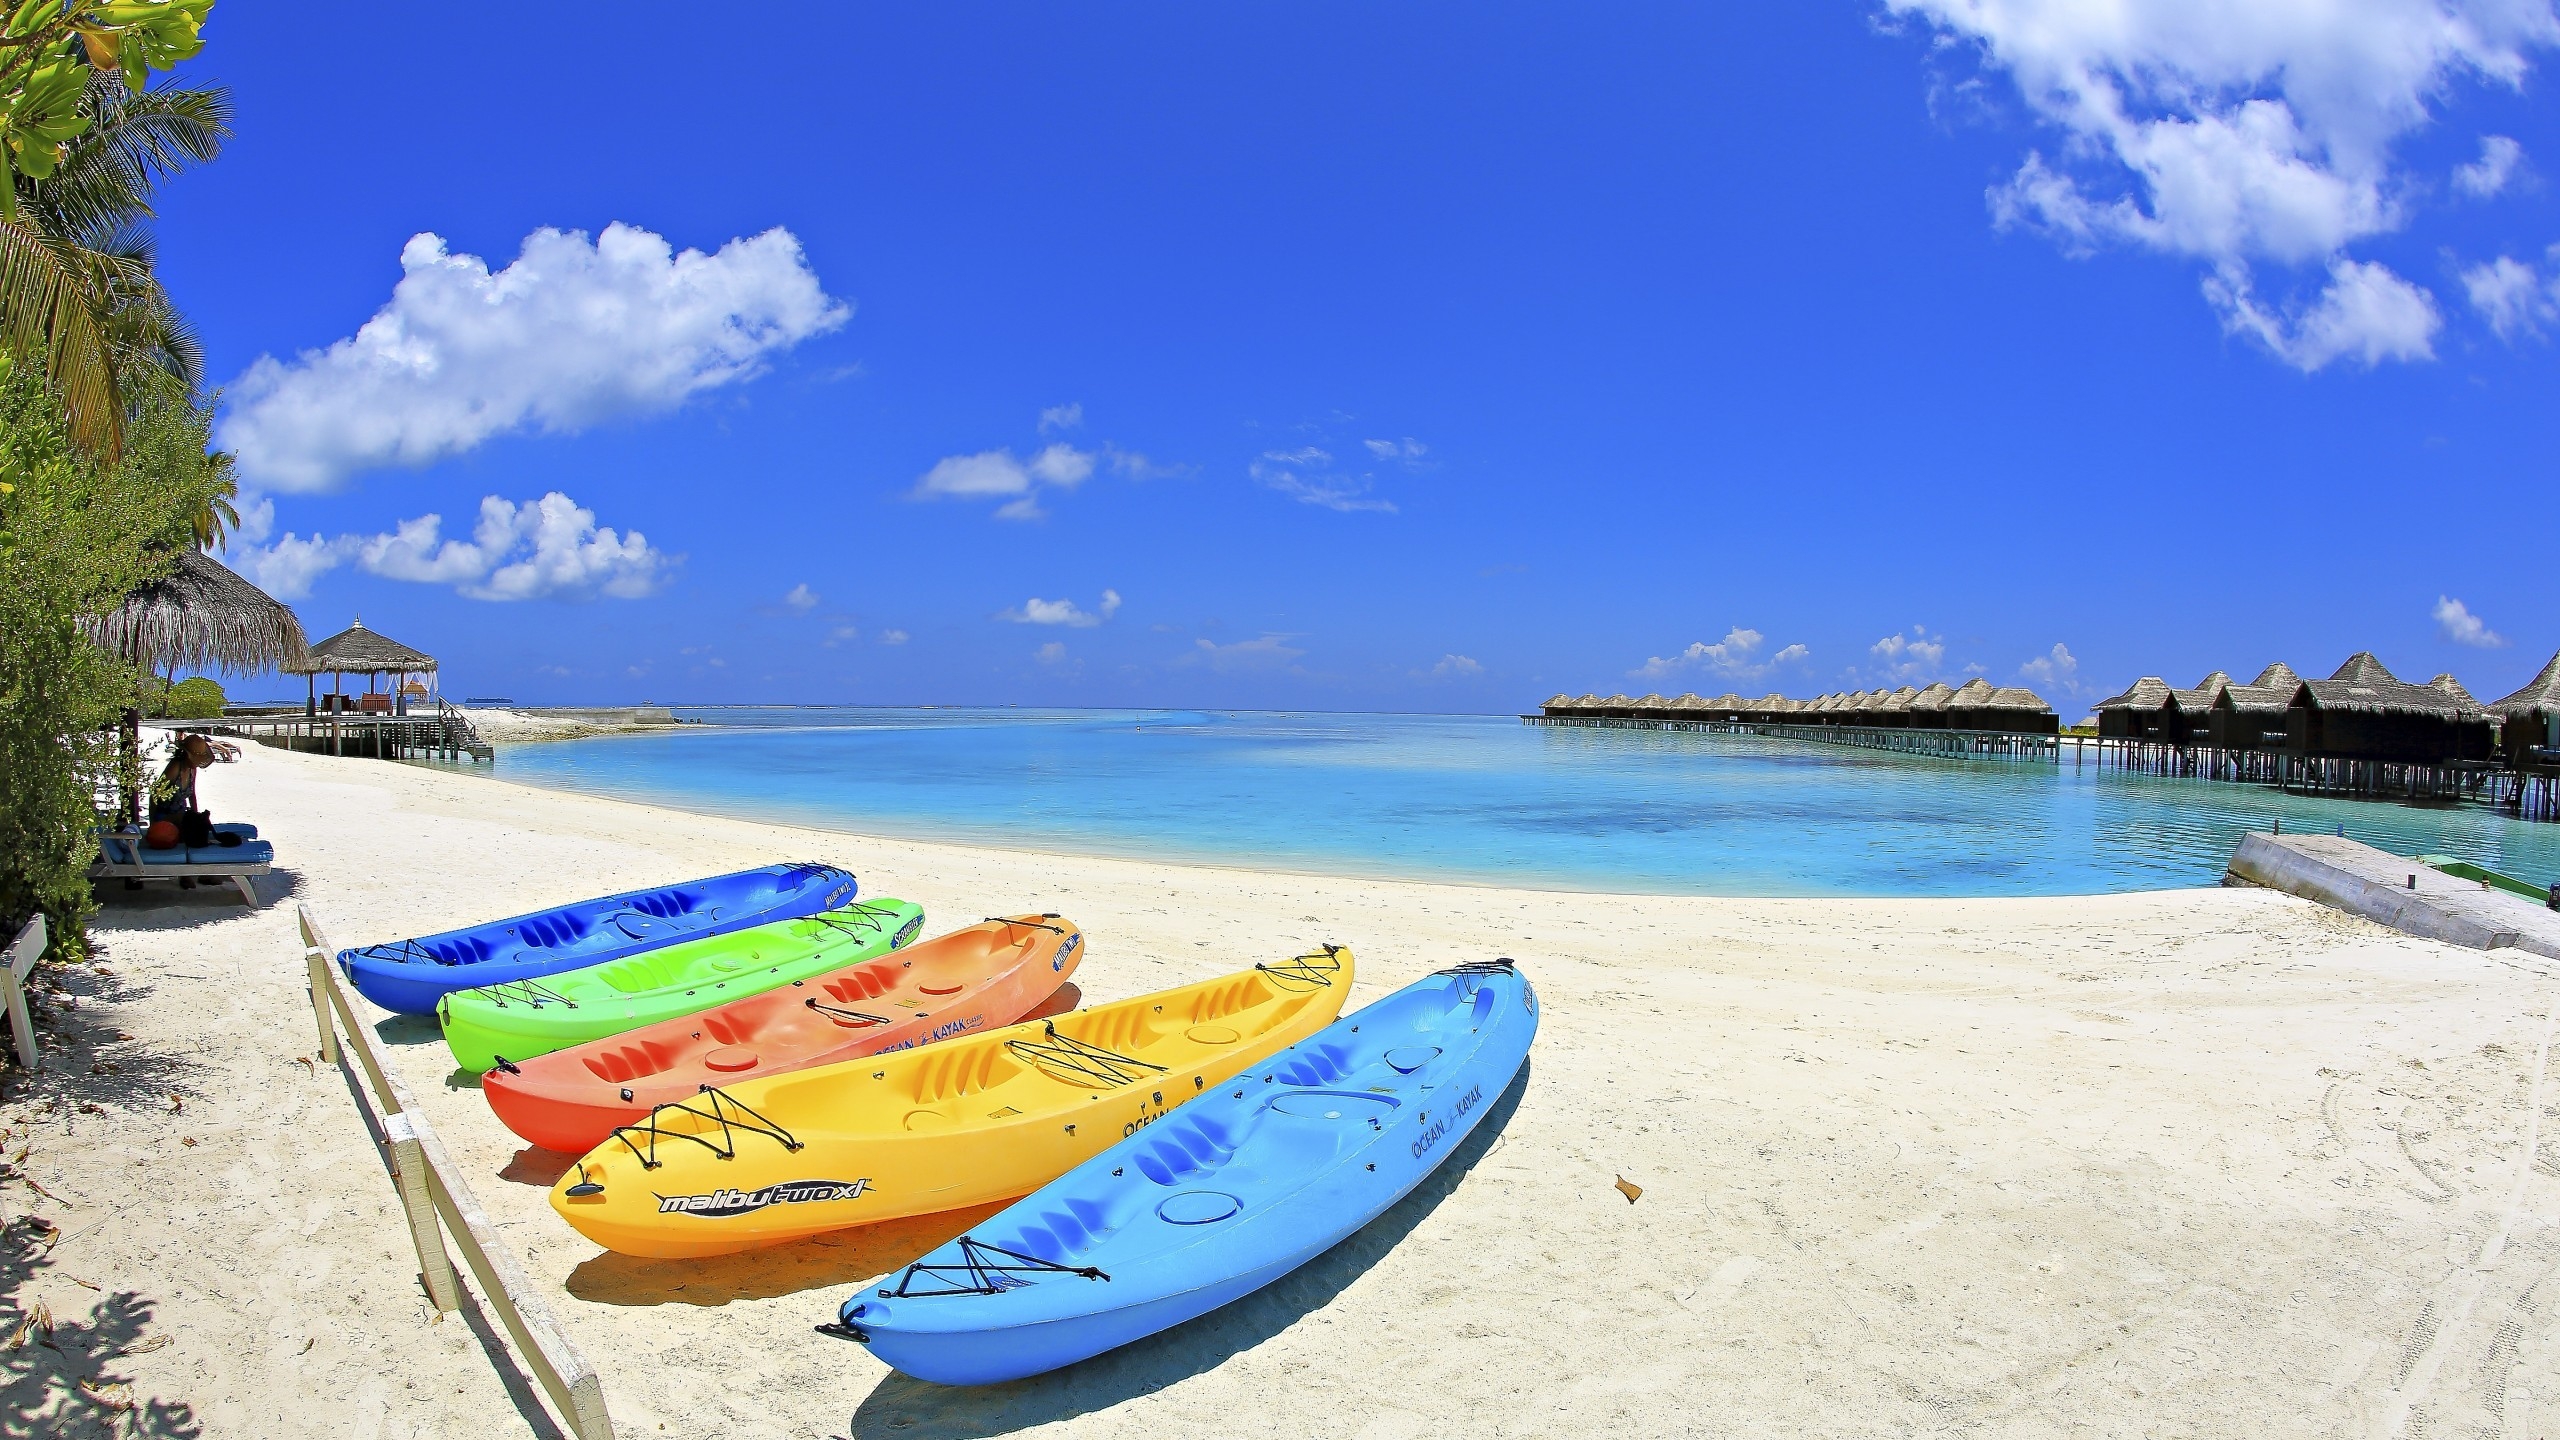 Maldives Beach Corner for 2560x1440 HDTV resolution